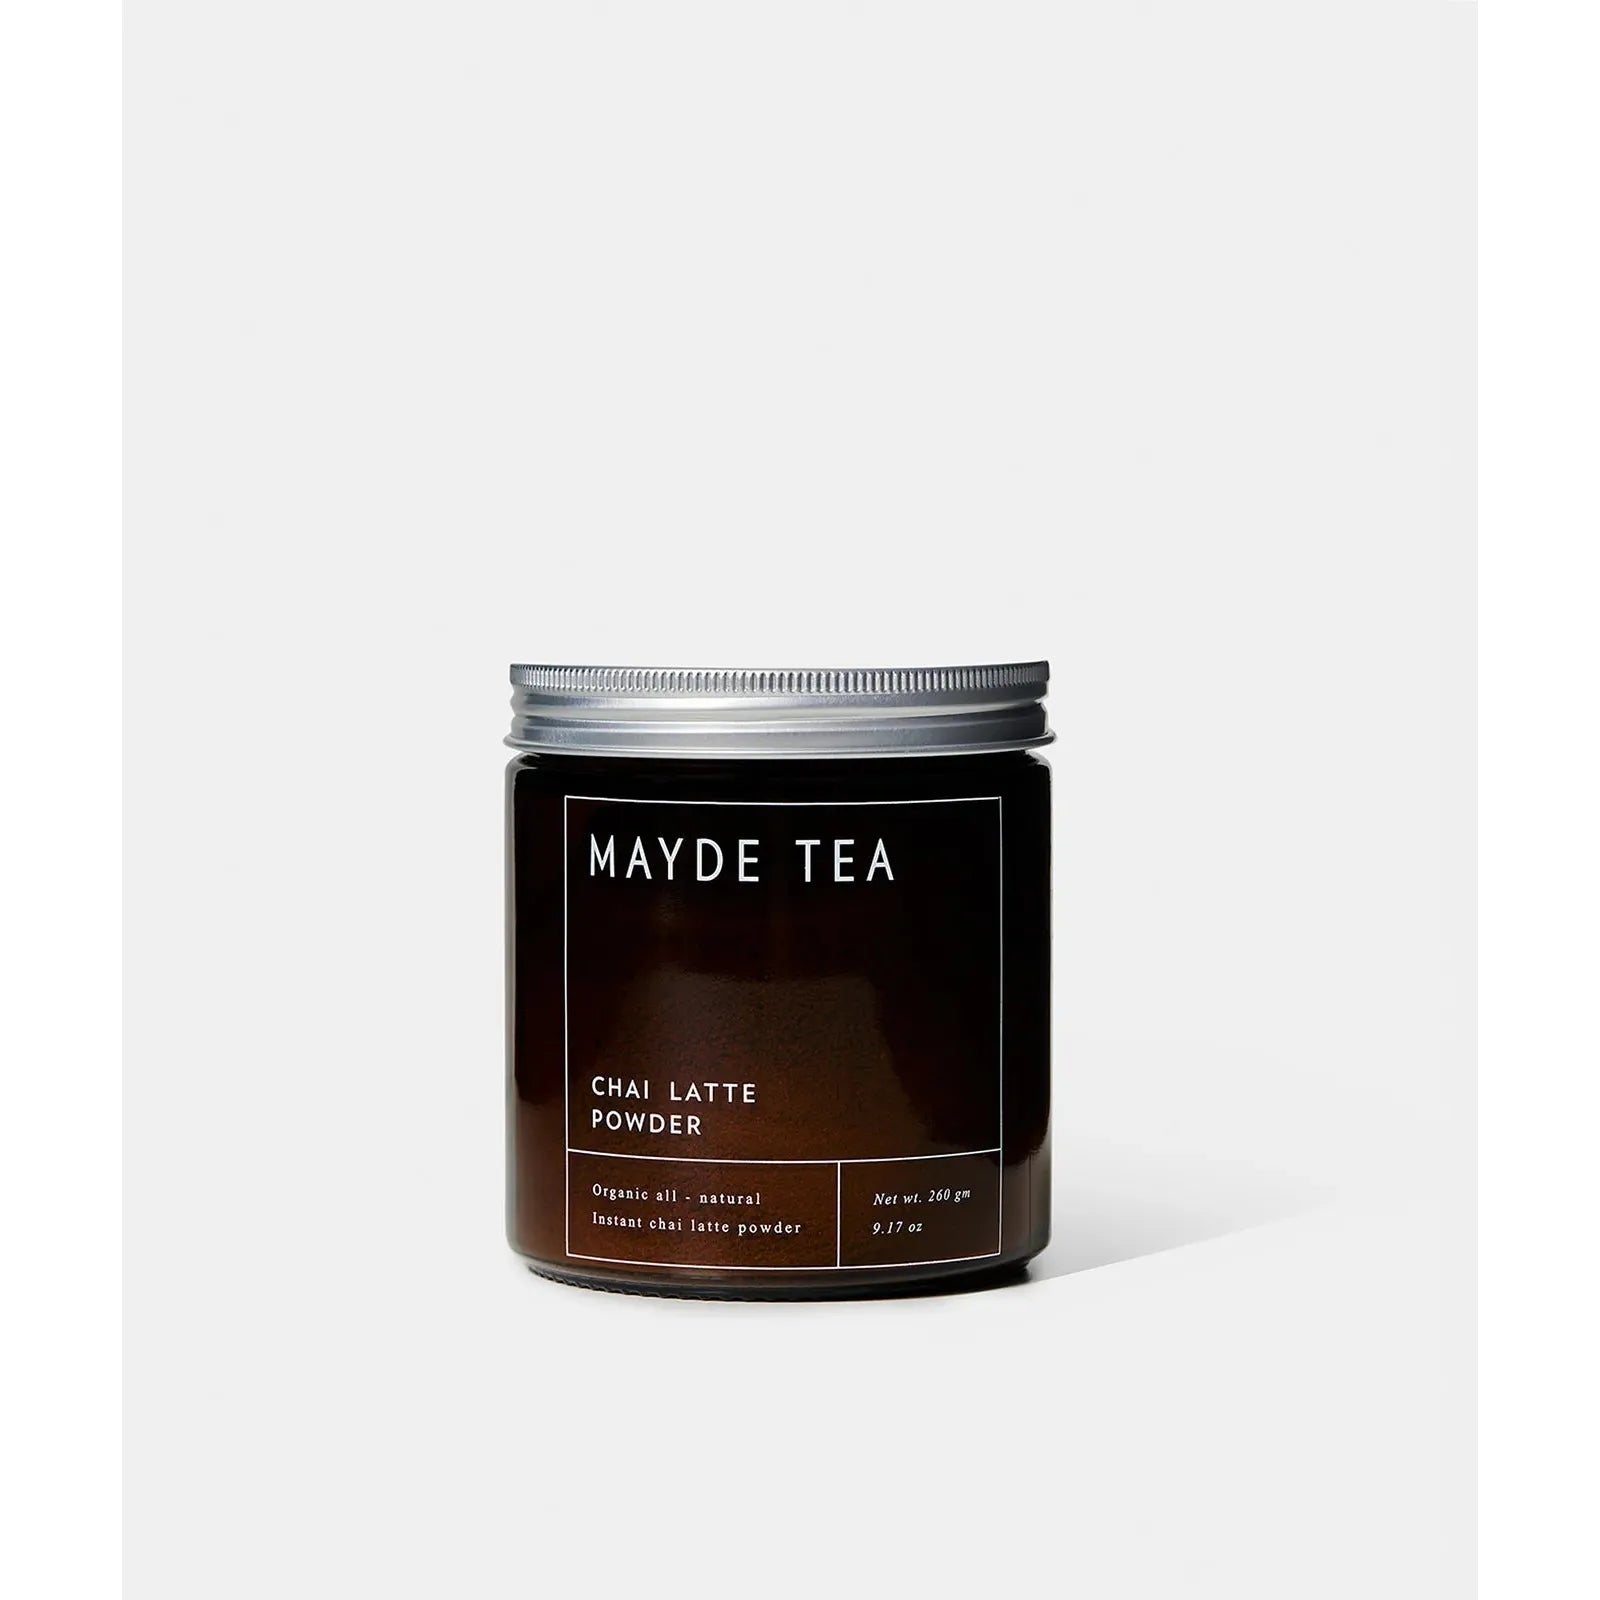 Mayde Tea Chai Latte Powder